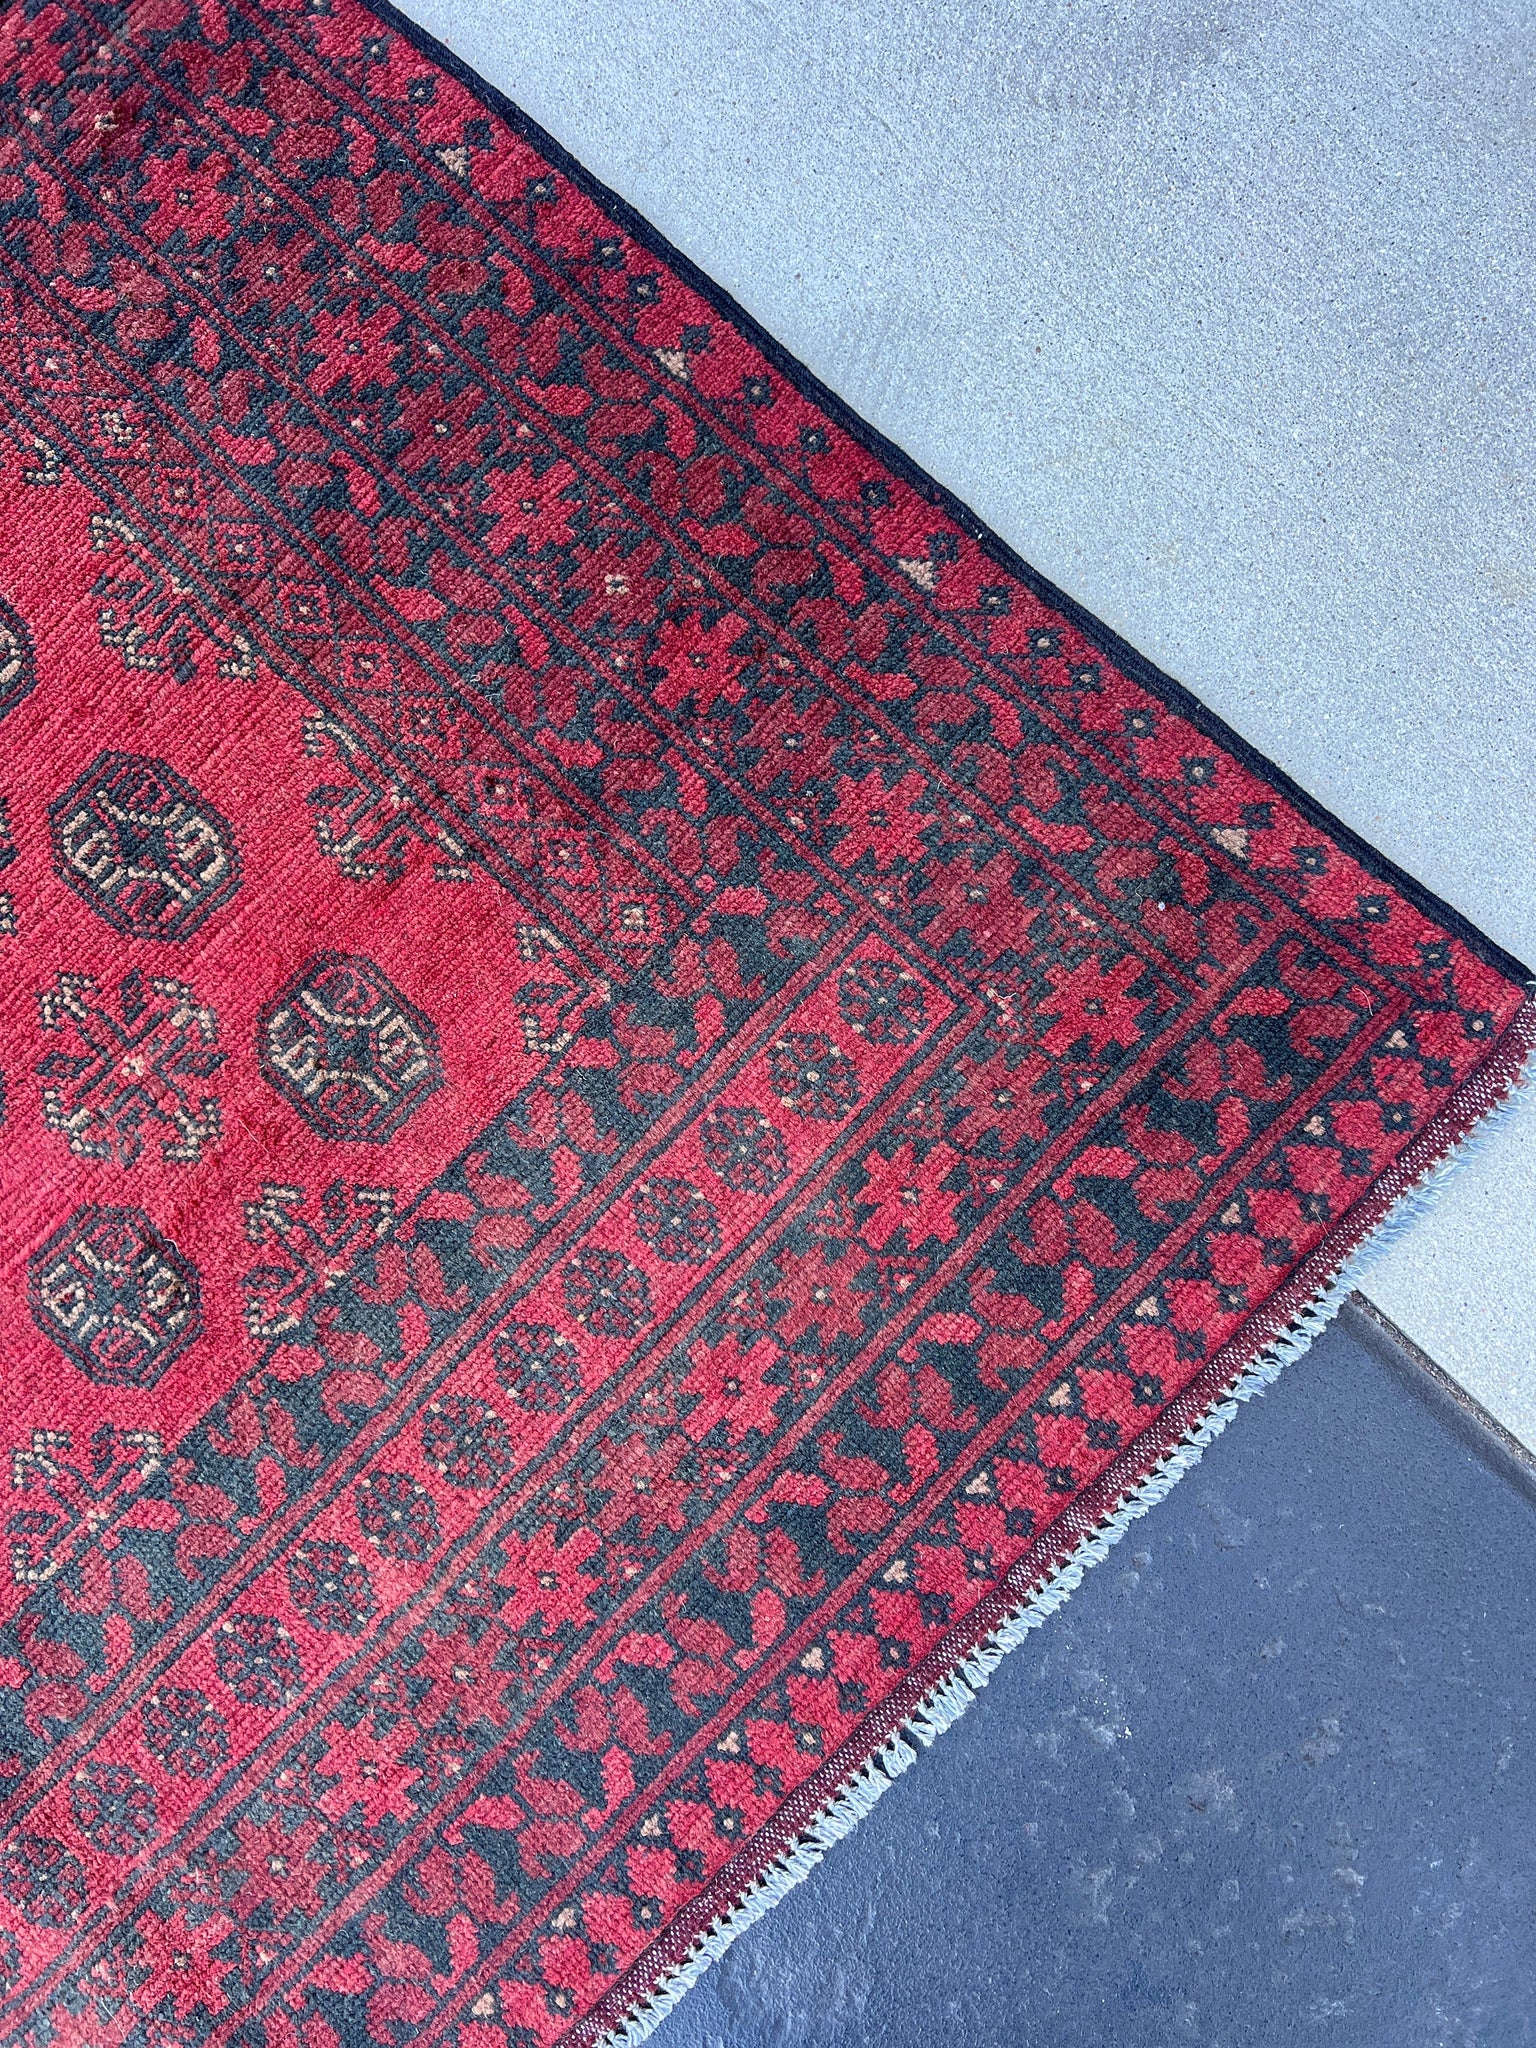 6x8 (180x245) Handmade Afghan Rug | Blood Red Black Beige | Hand Knotted Floral Persian Turkish Oriental Bohemian Wool